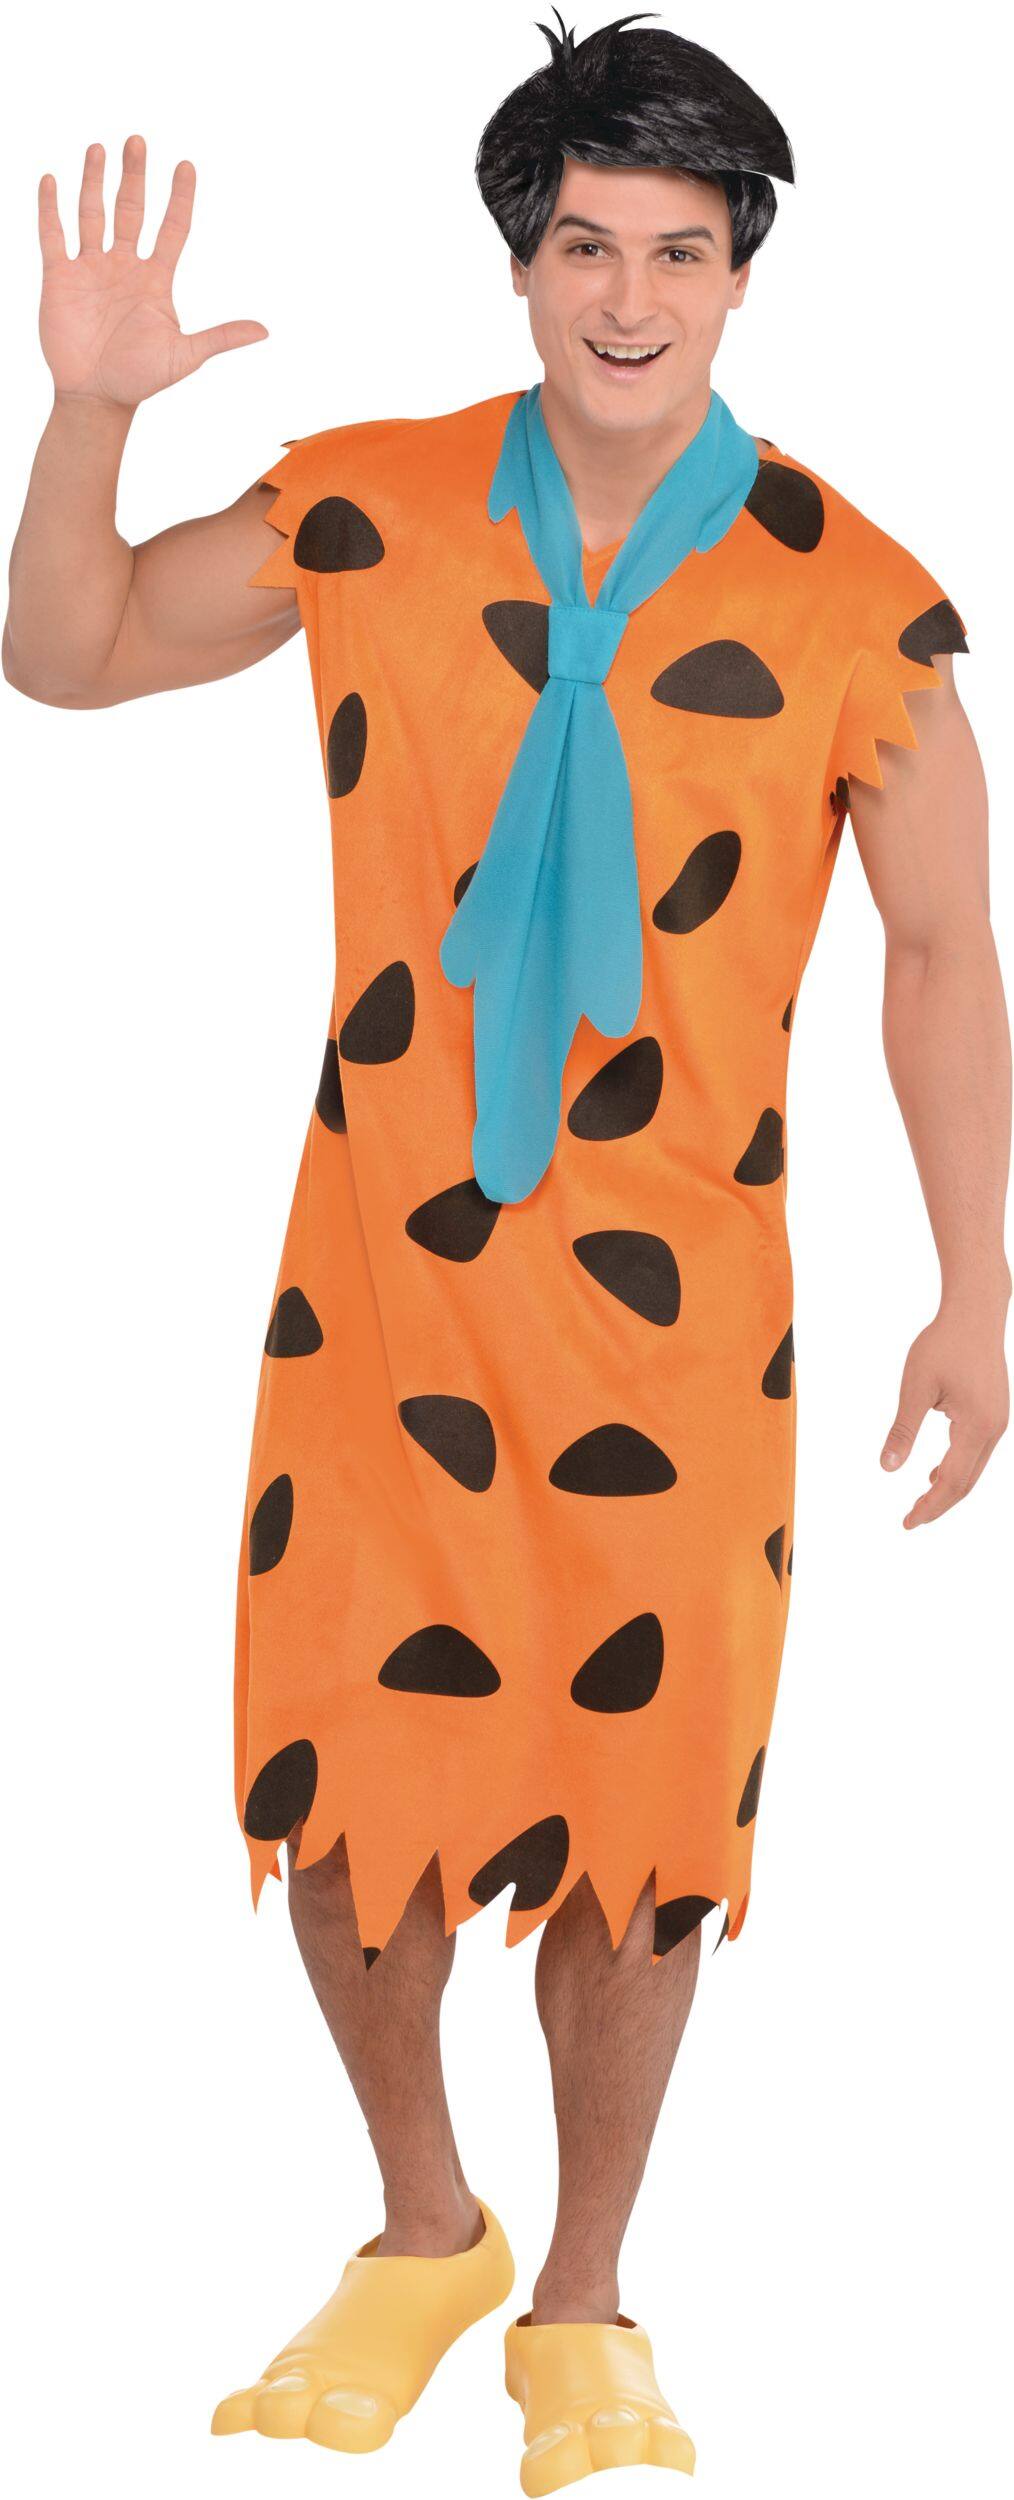 The Flintstones Fred Flintstone Halloween Costume, Adult, More Options ...